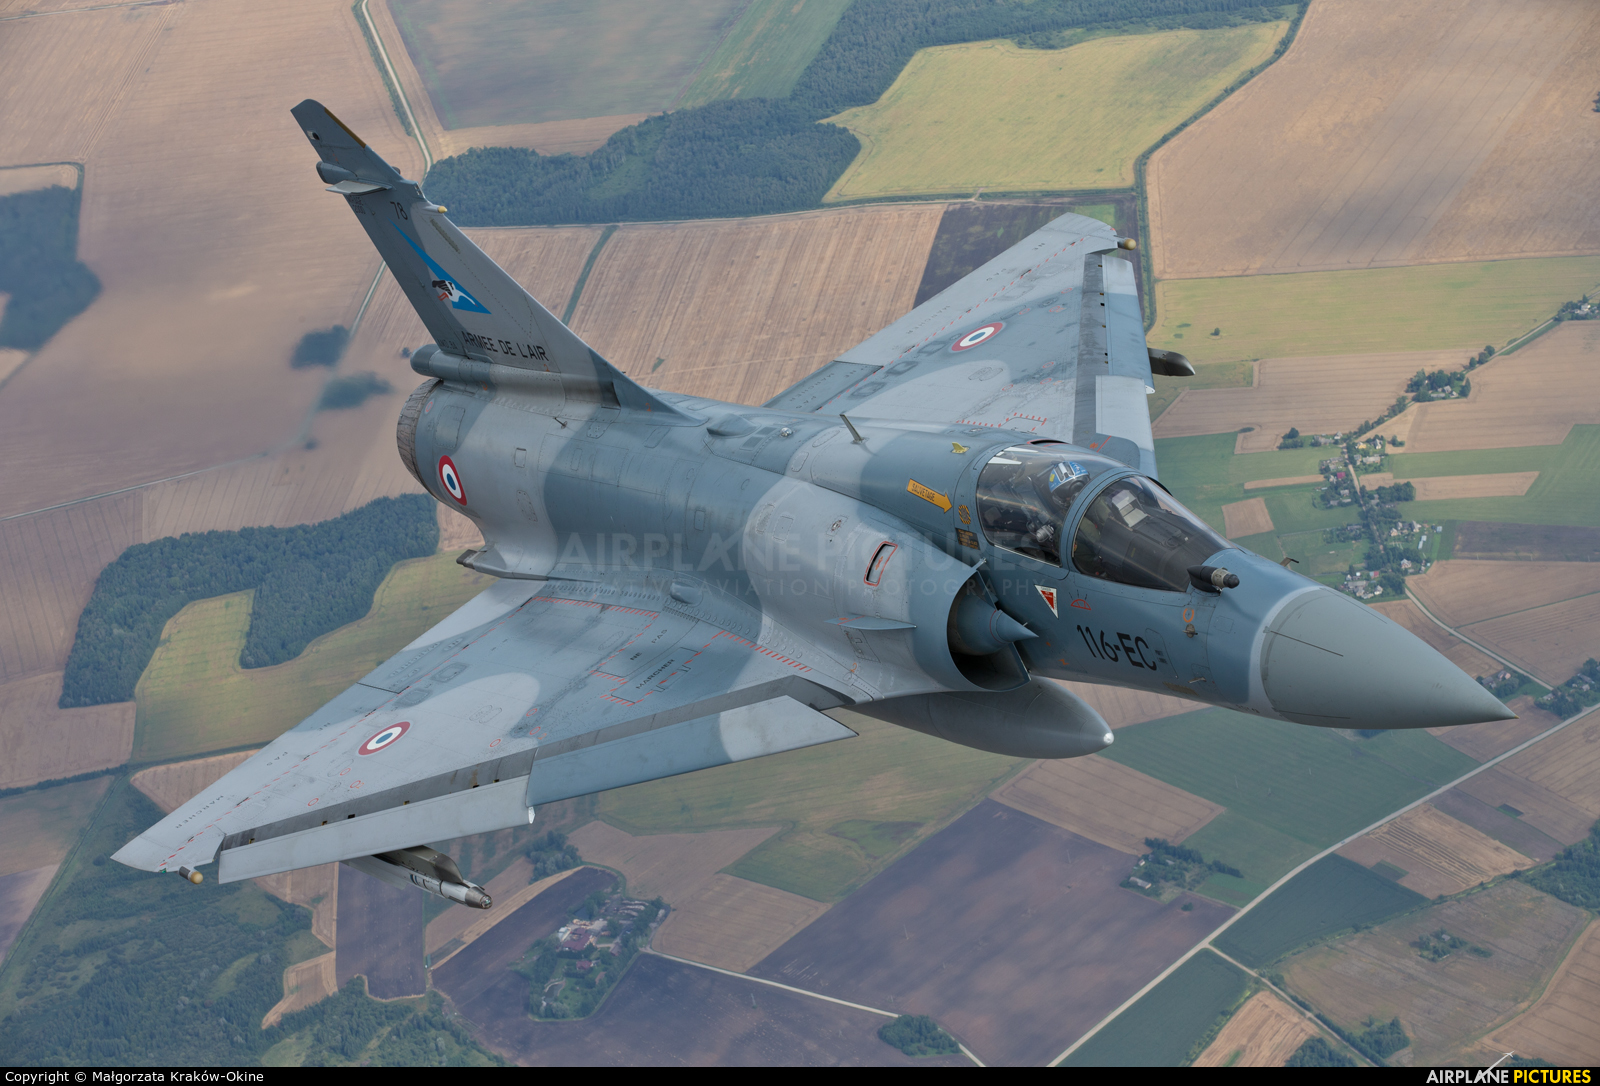 Dassault Mirage 2000 Backgrounds, Compatible - PC, Mobile, Gadgets| 1600x1086 px